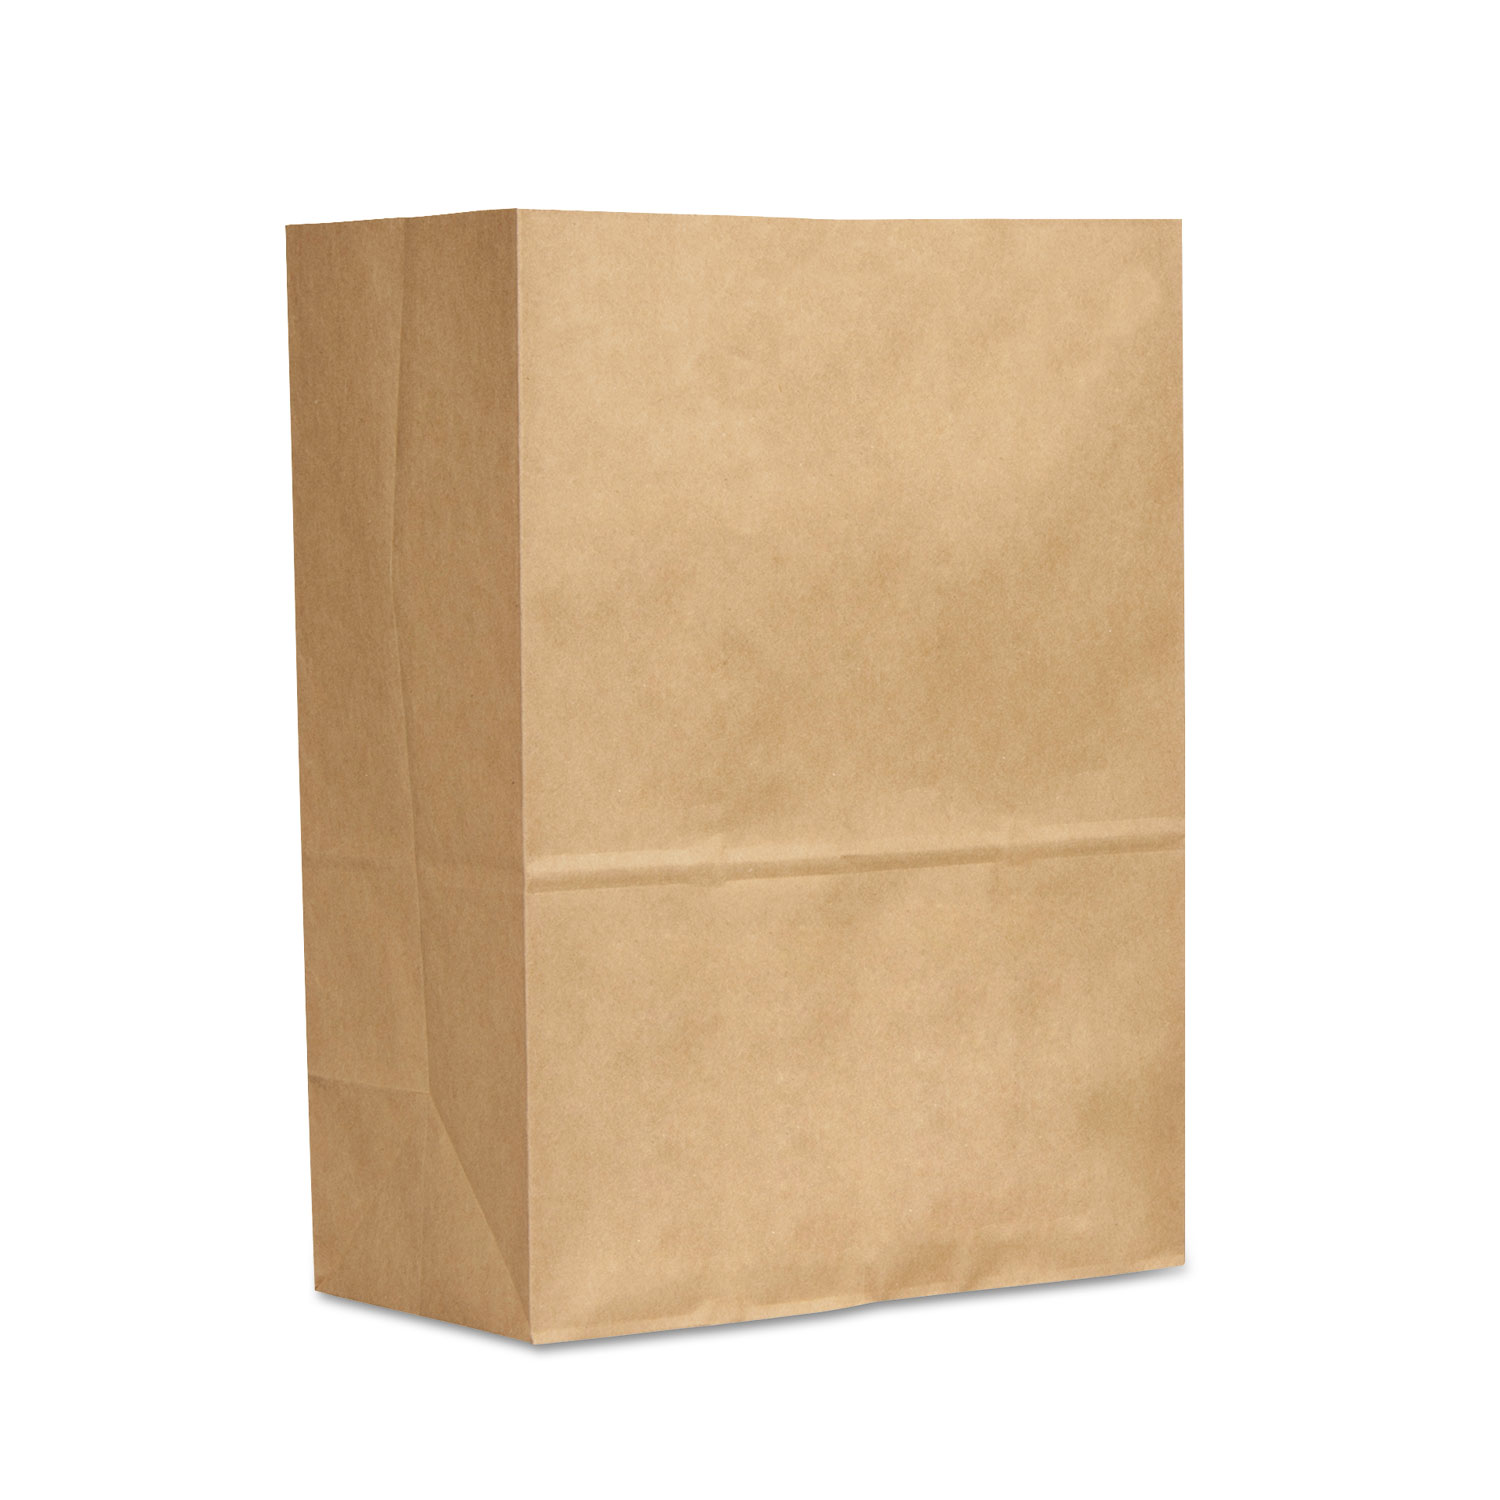 1/6 BBL Paper Grocery Bag, 70lb Kraft, Standard 12 x 7 x 17, 300 bags